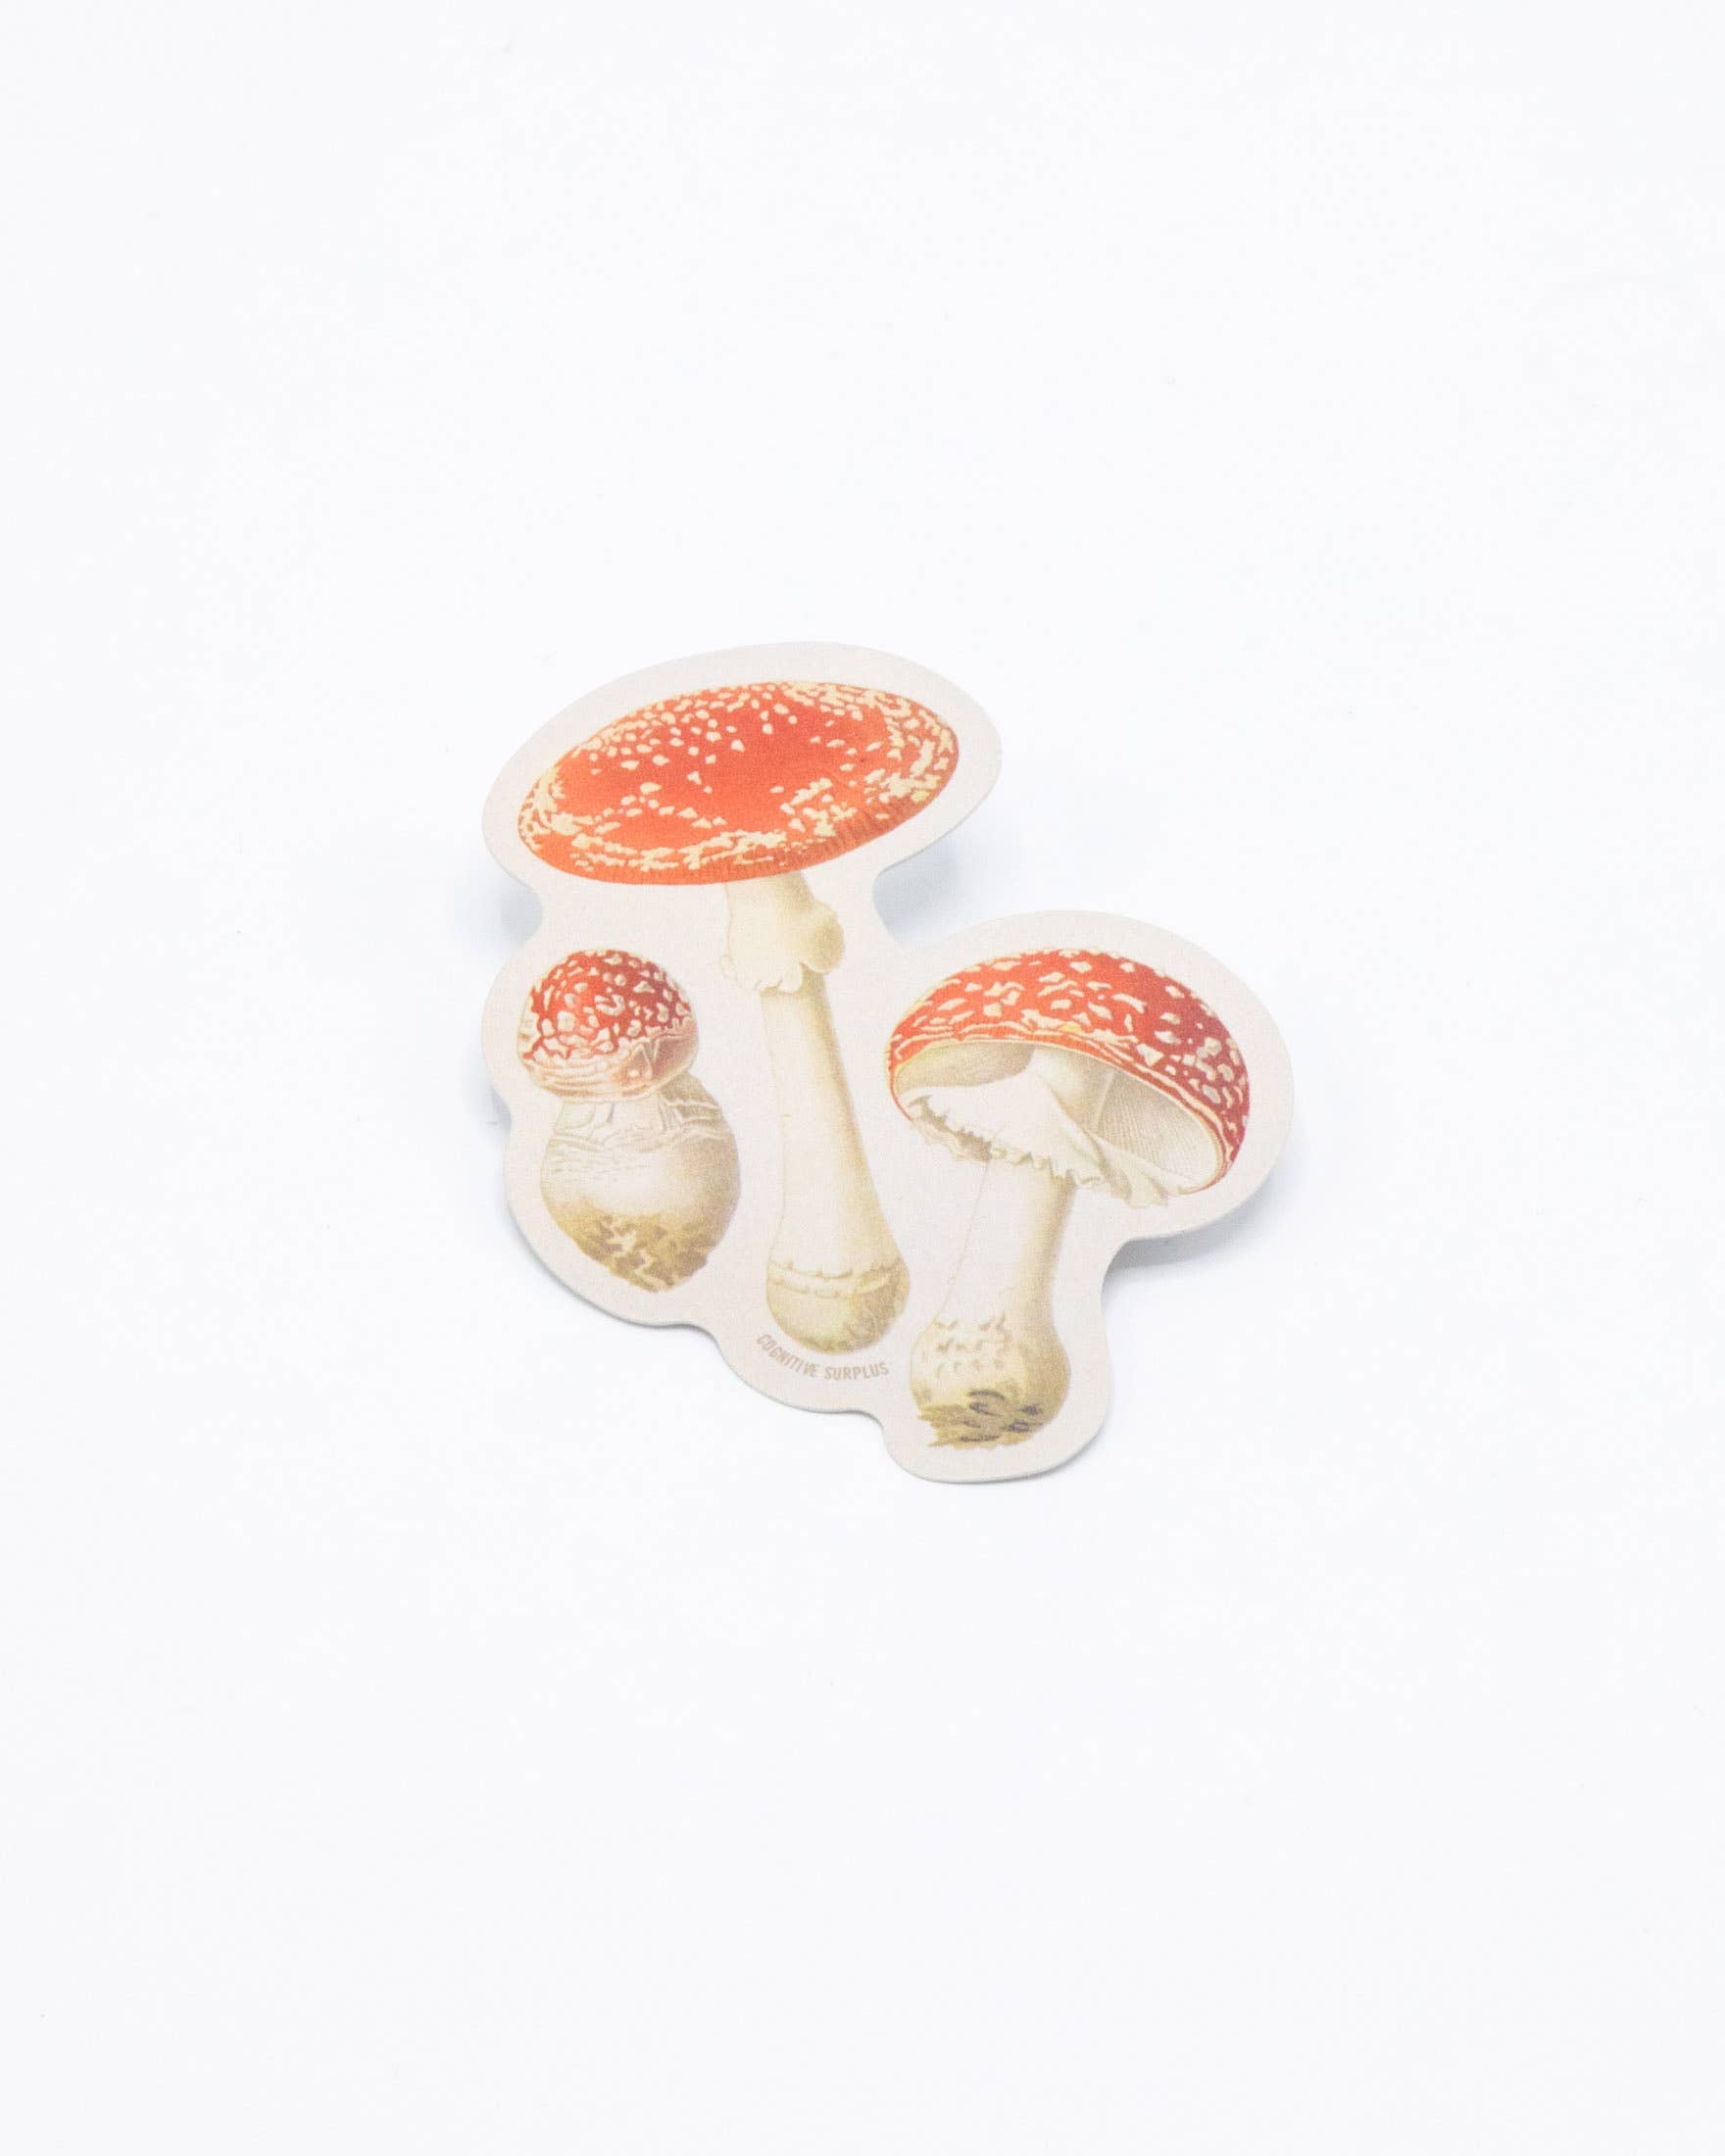 FlyAgaric Poisonous Mushrooms